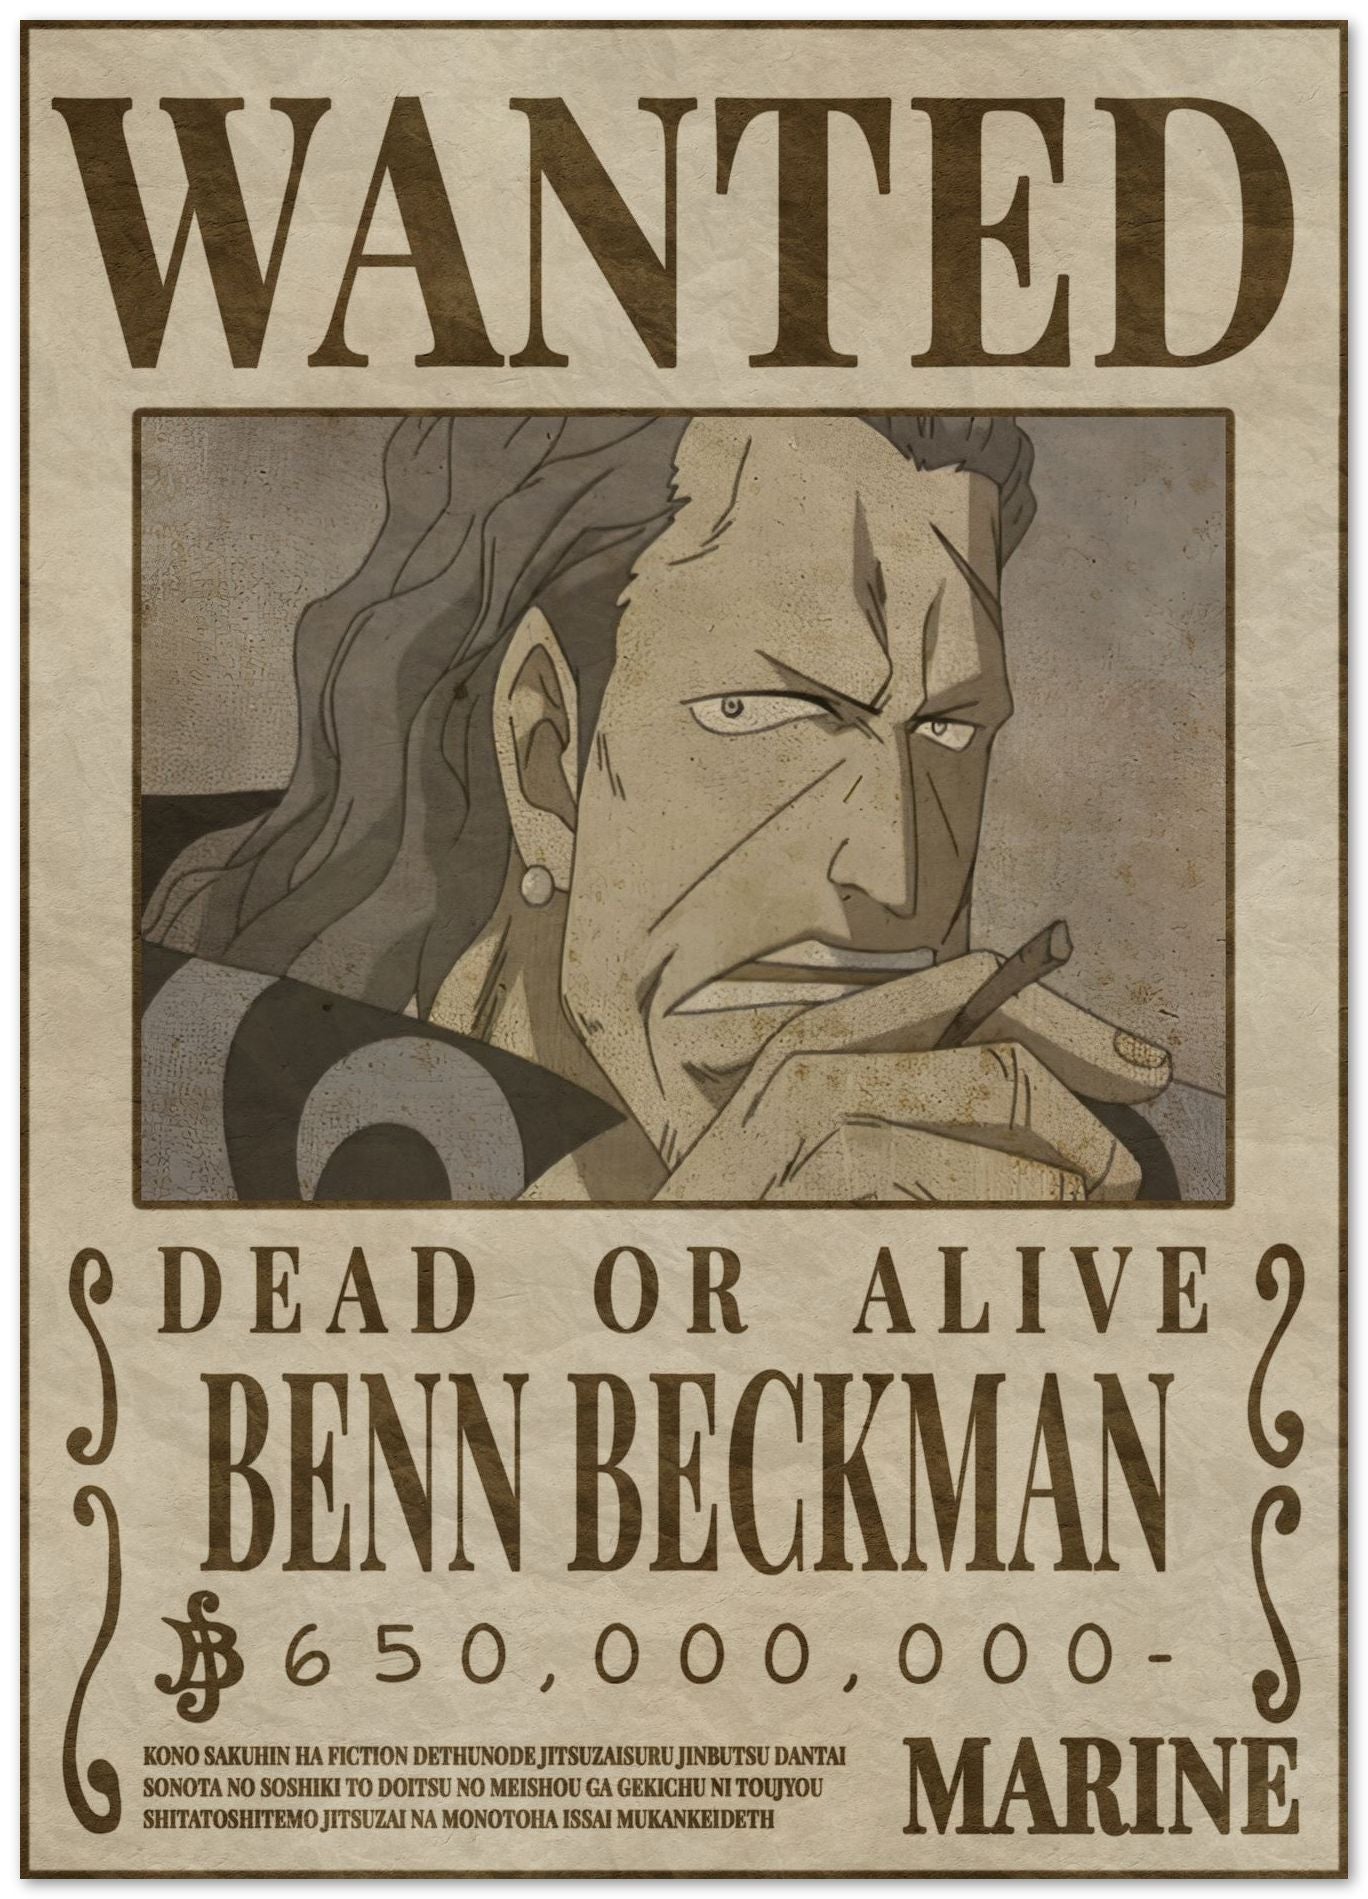 Benn-Beckman Bounty - @ZakeDjelevic